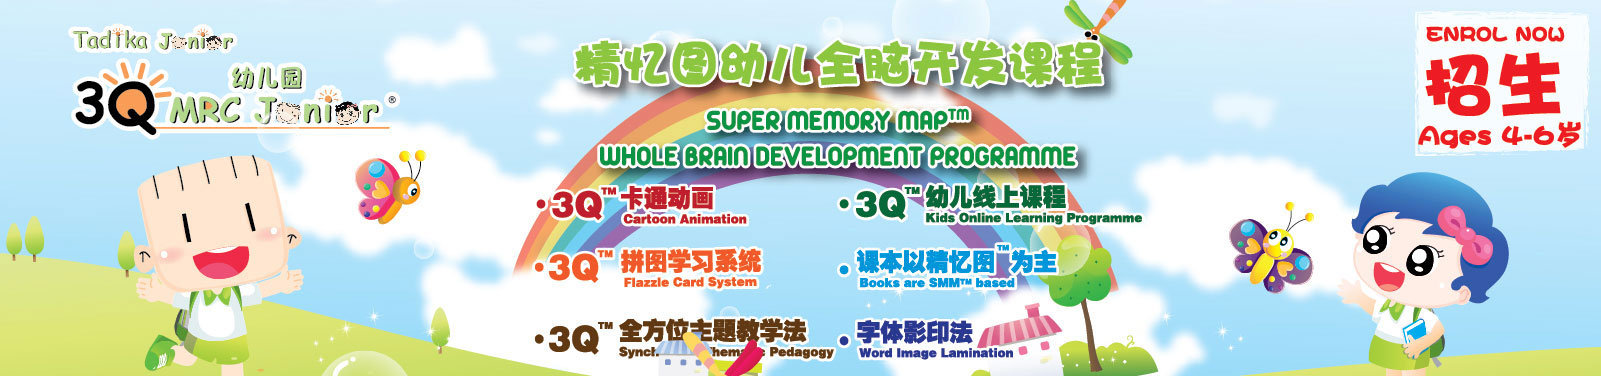 3Q MRC Junior - Super Memory Map Whole Brain Development Programme